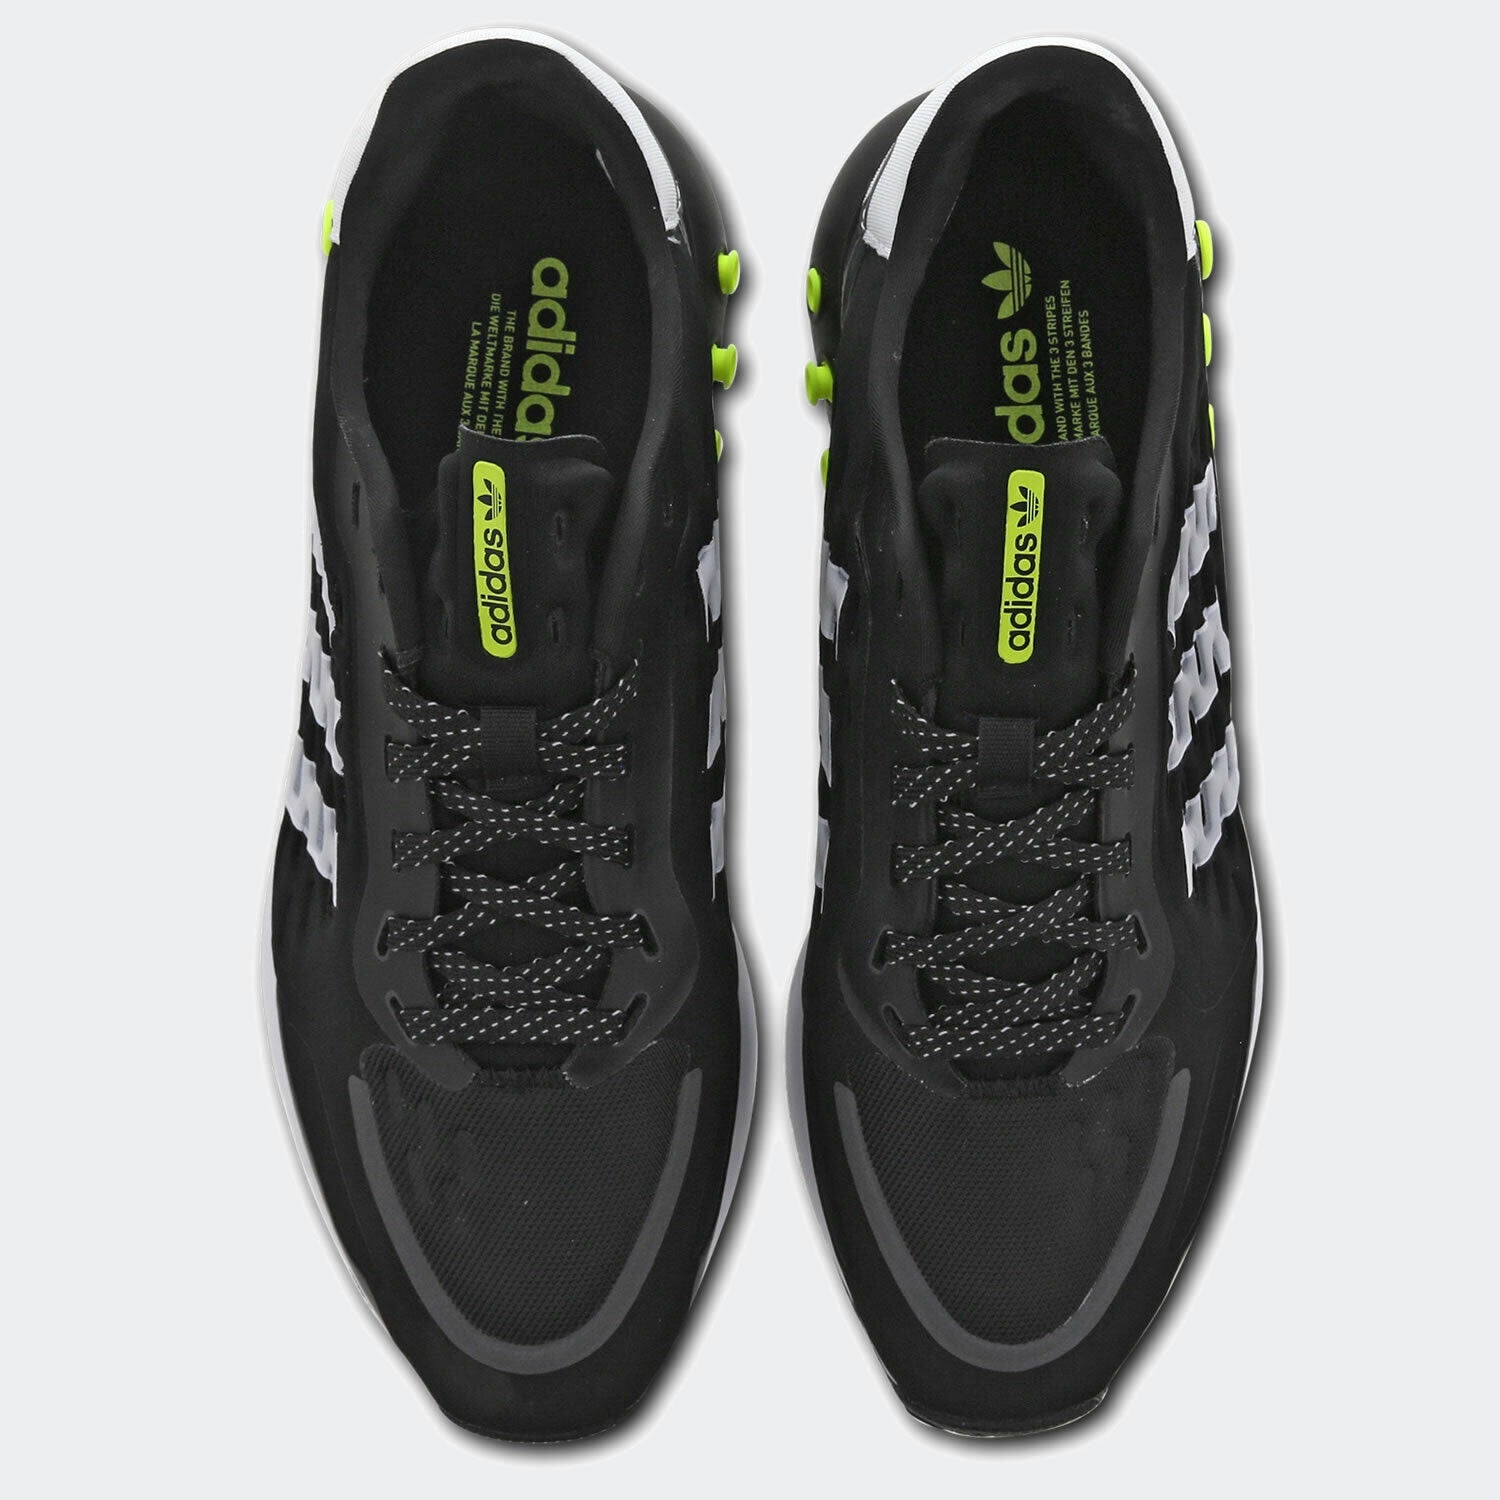 arm manipuleren maagd Adidas Junior LA Trainer III Shoes FY7218 - Trade Sports